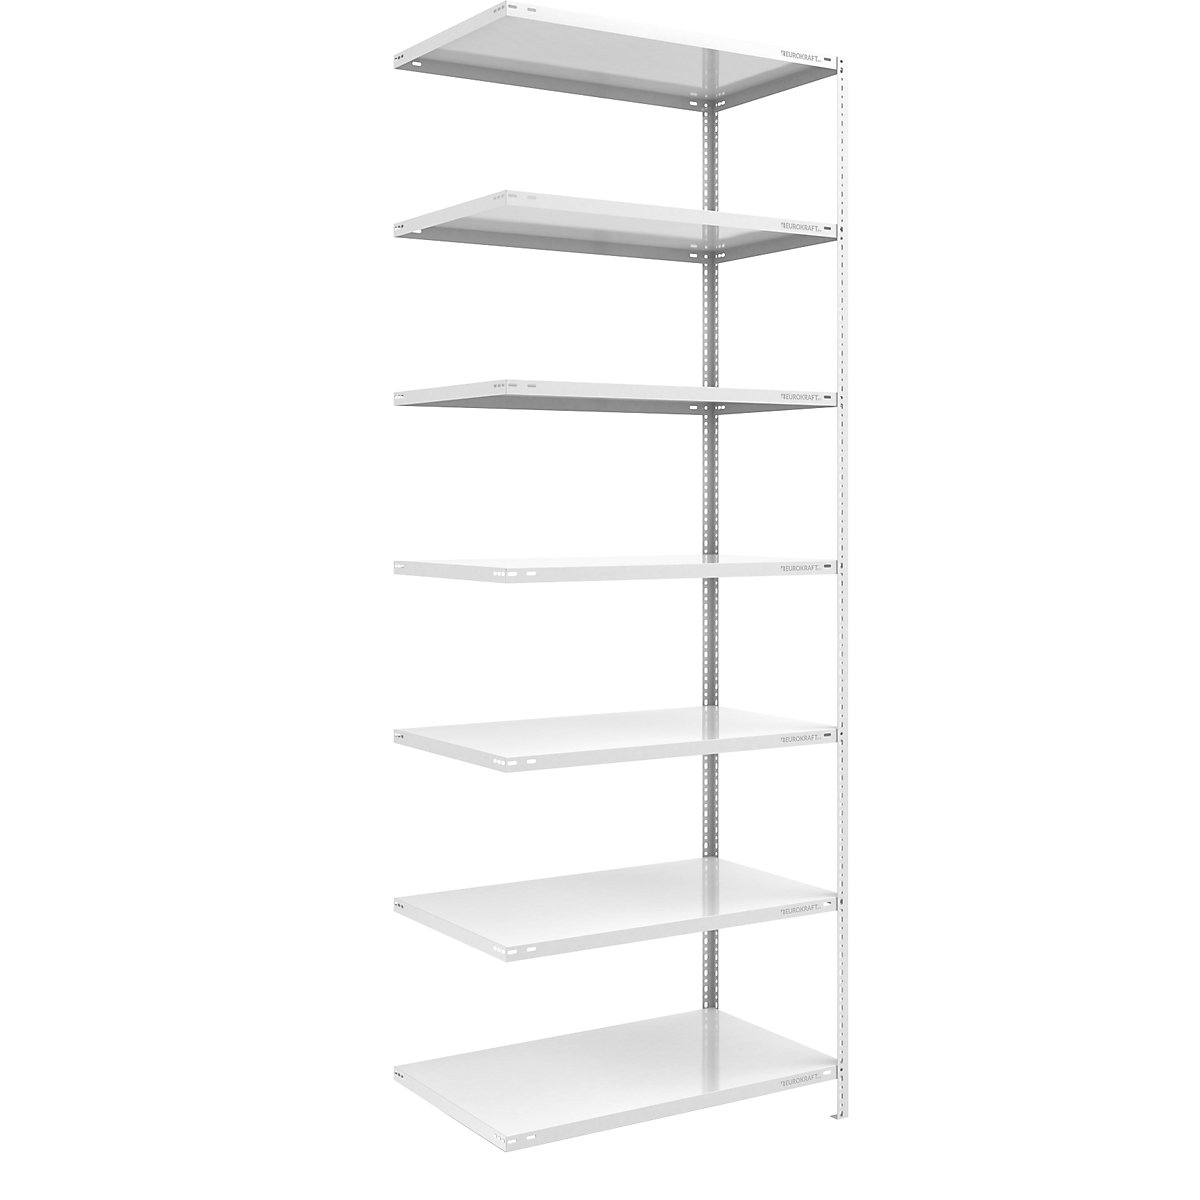 Bolt-together shelf unit, light duty, plastic coated – eurokraft pro, shelf unit height 3000 mm, shelf width 1000 mm, depth 800 mm, extension shelf unit-6